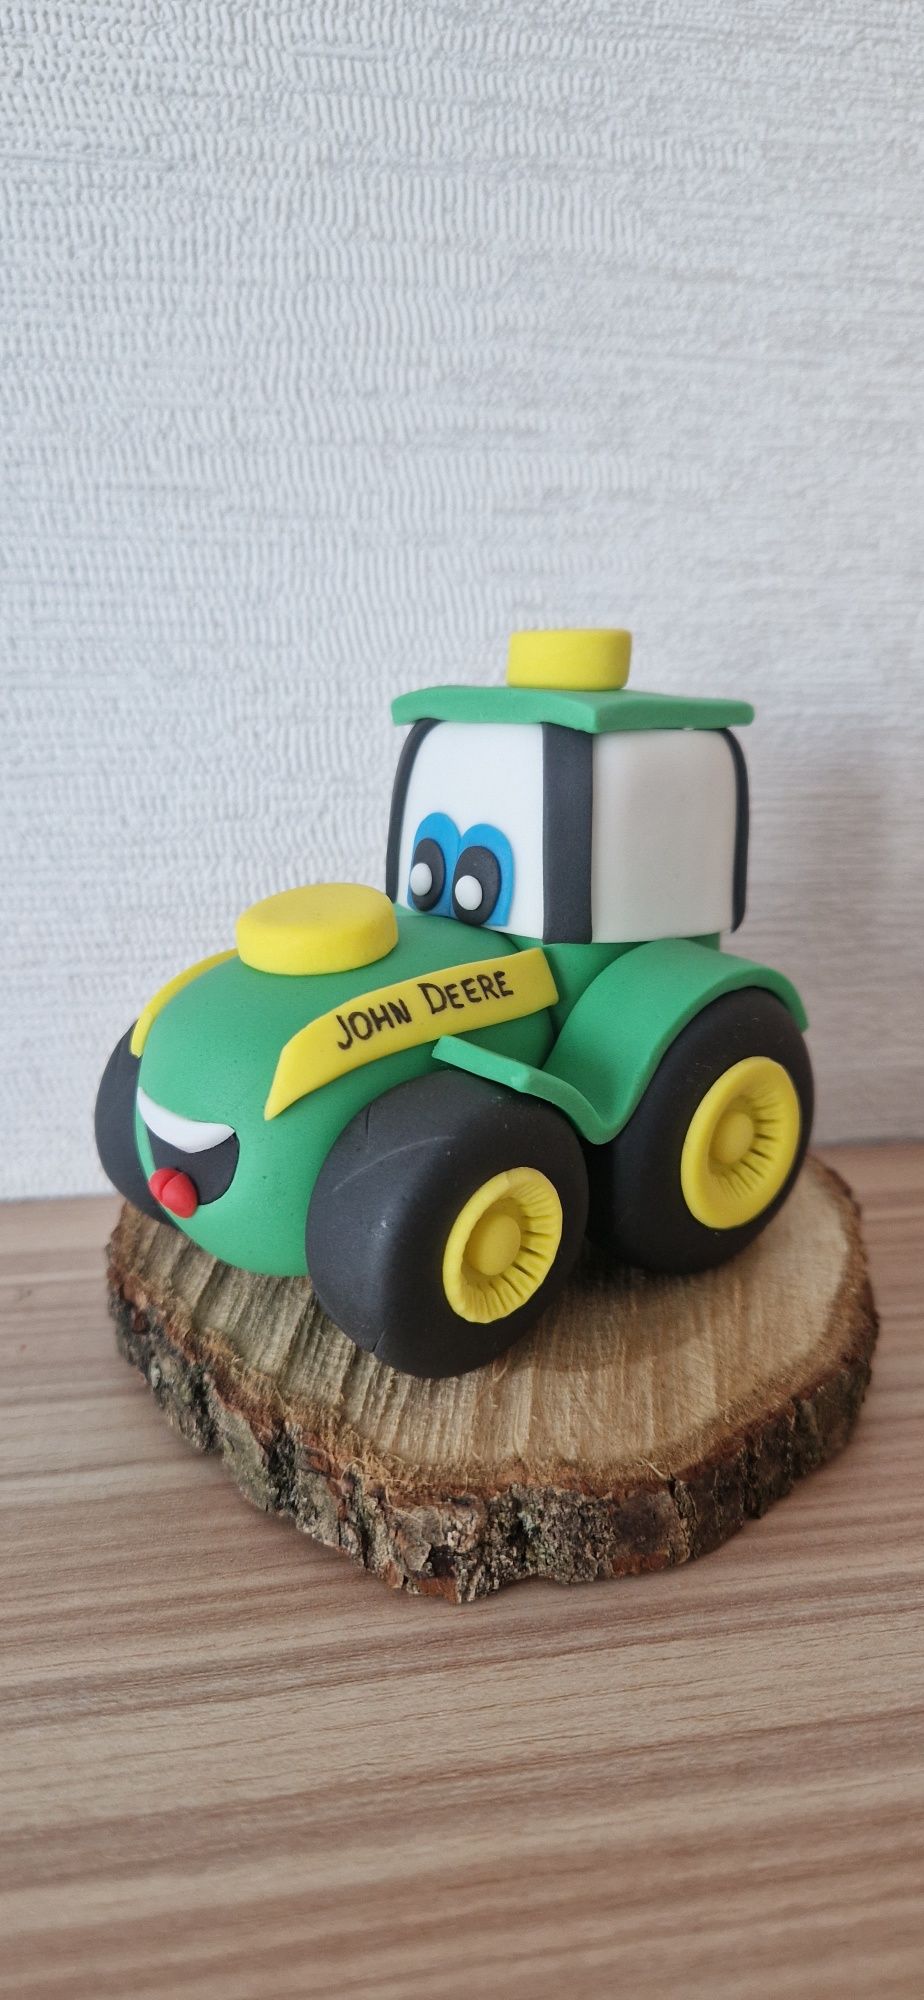 Traktor John Deere masa cukrowa figurka na tort